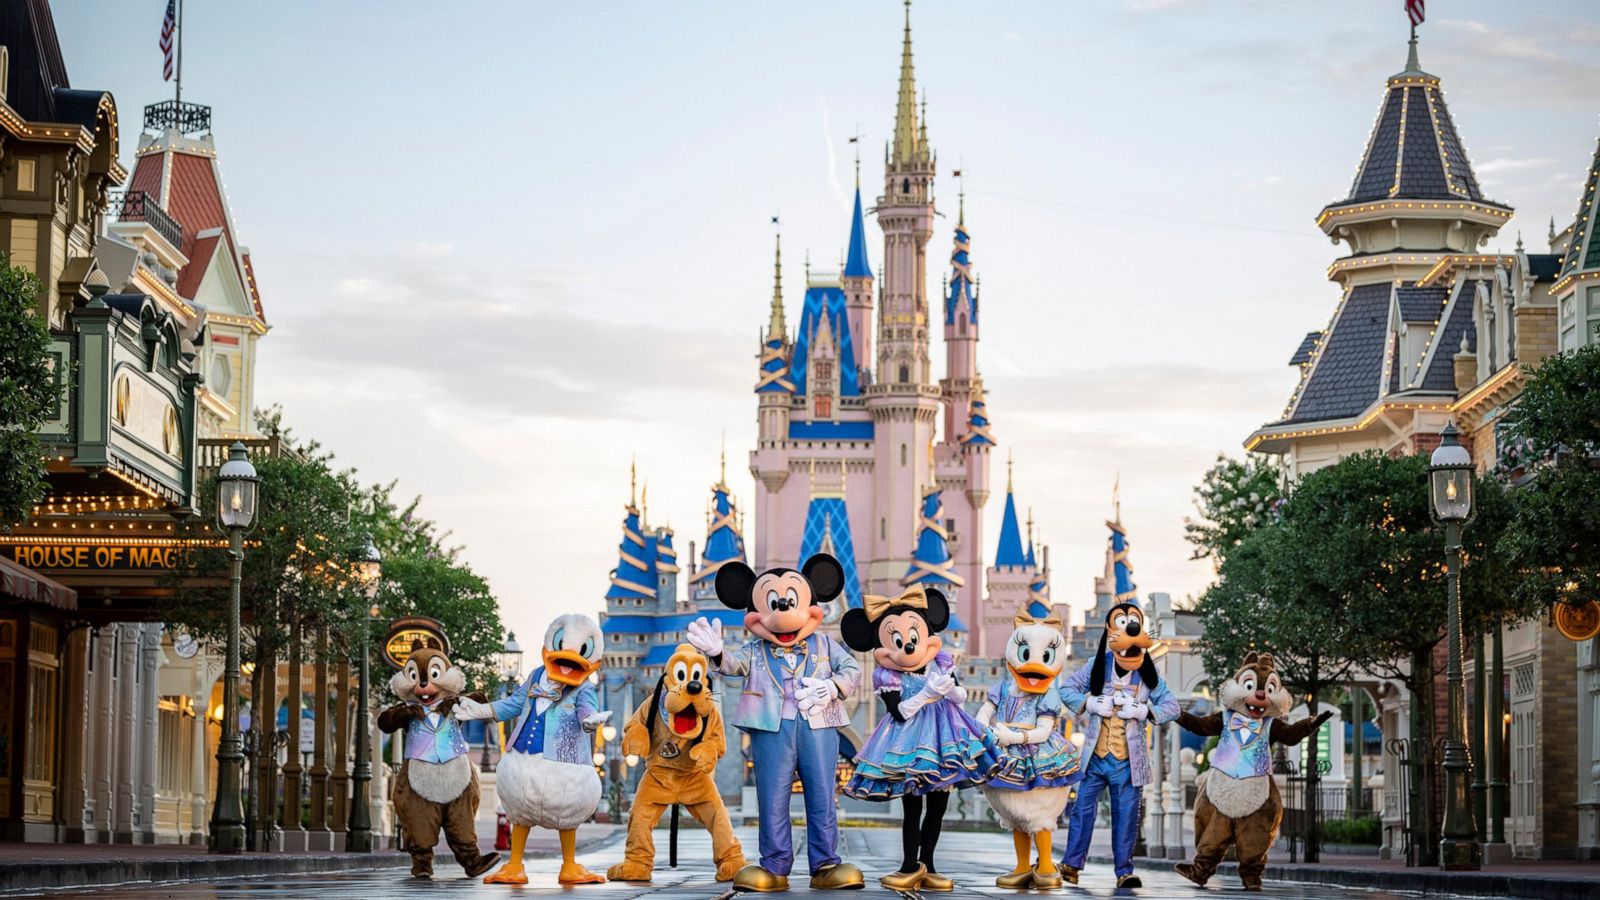 Walt Disney World's 50th anniversary party starts Oct. 1 - ABC News